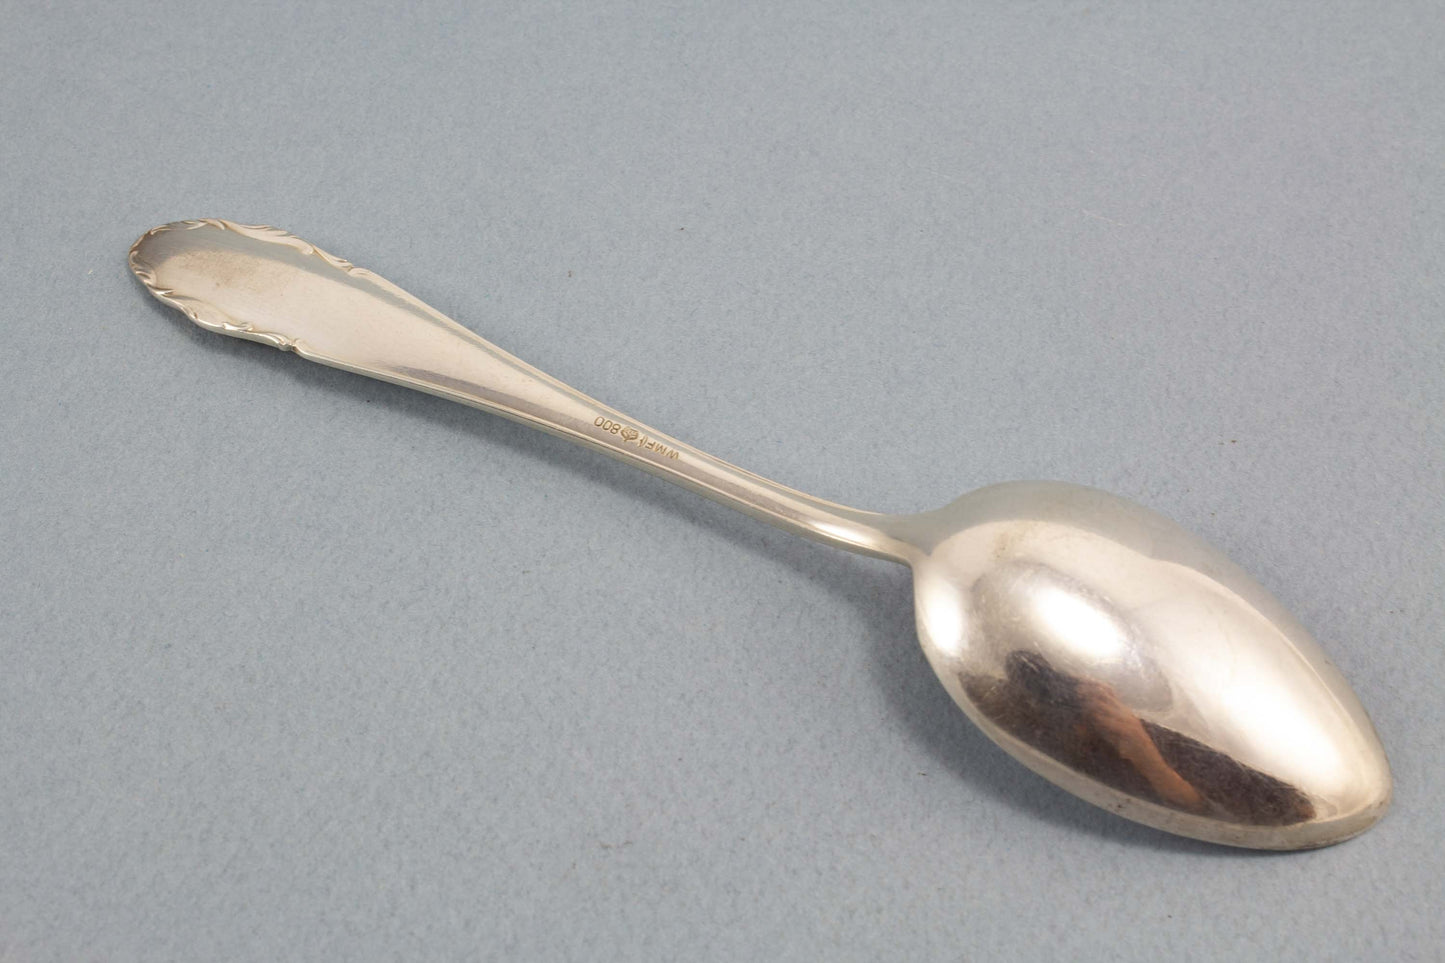 Silver tea spoon, 800 silver, WMF 2200